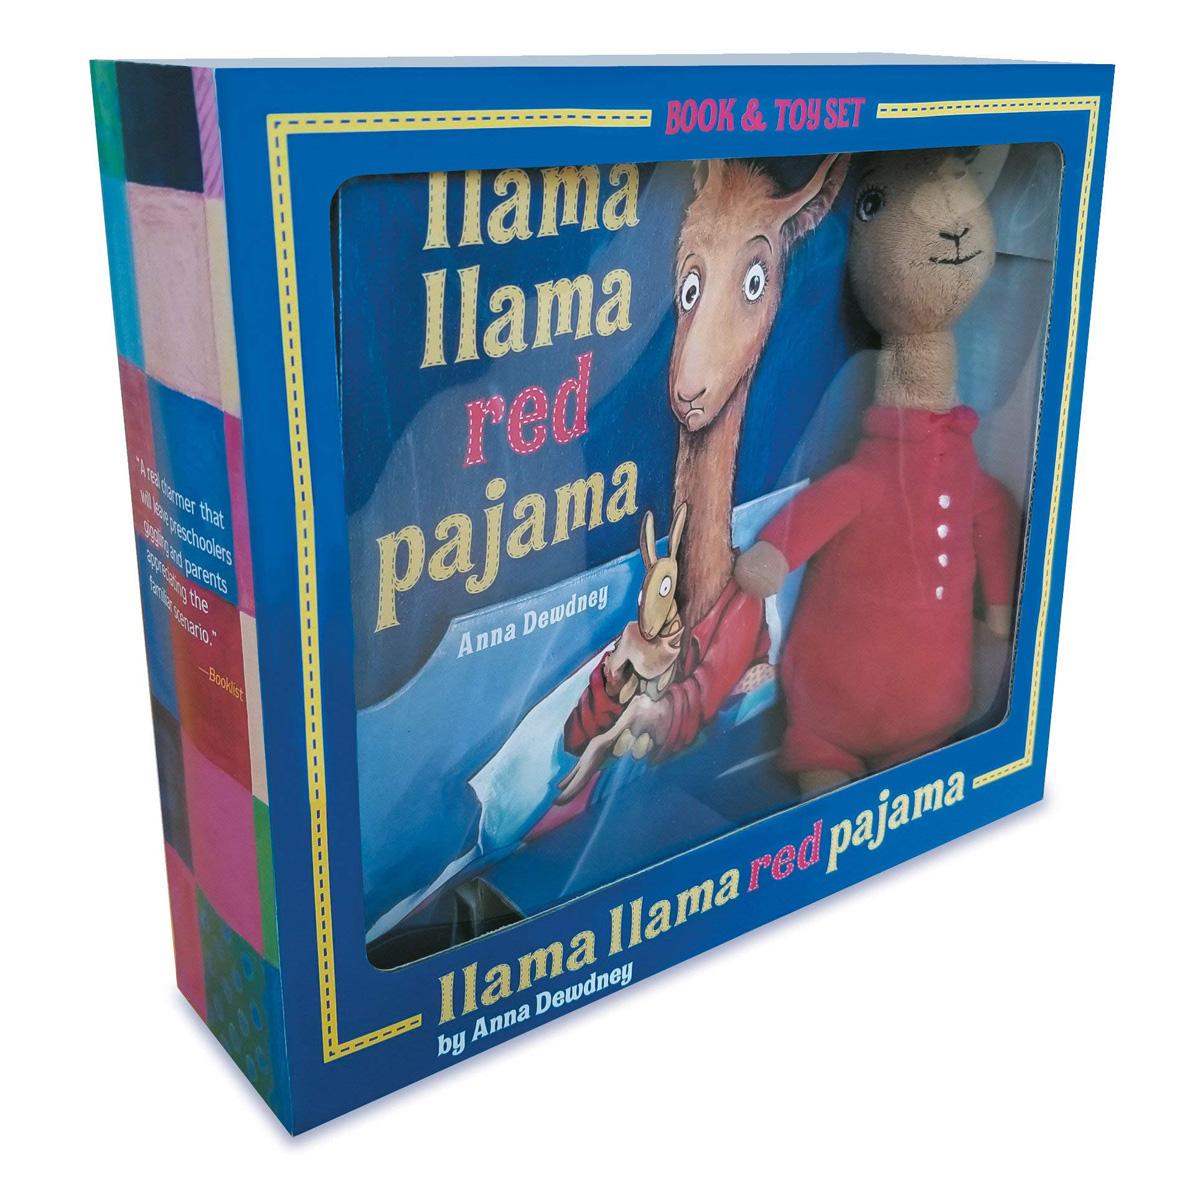 Llama Llama Red Pajama Hardcover Book and Plush Toy Set for $9.98